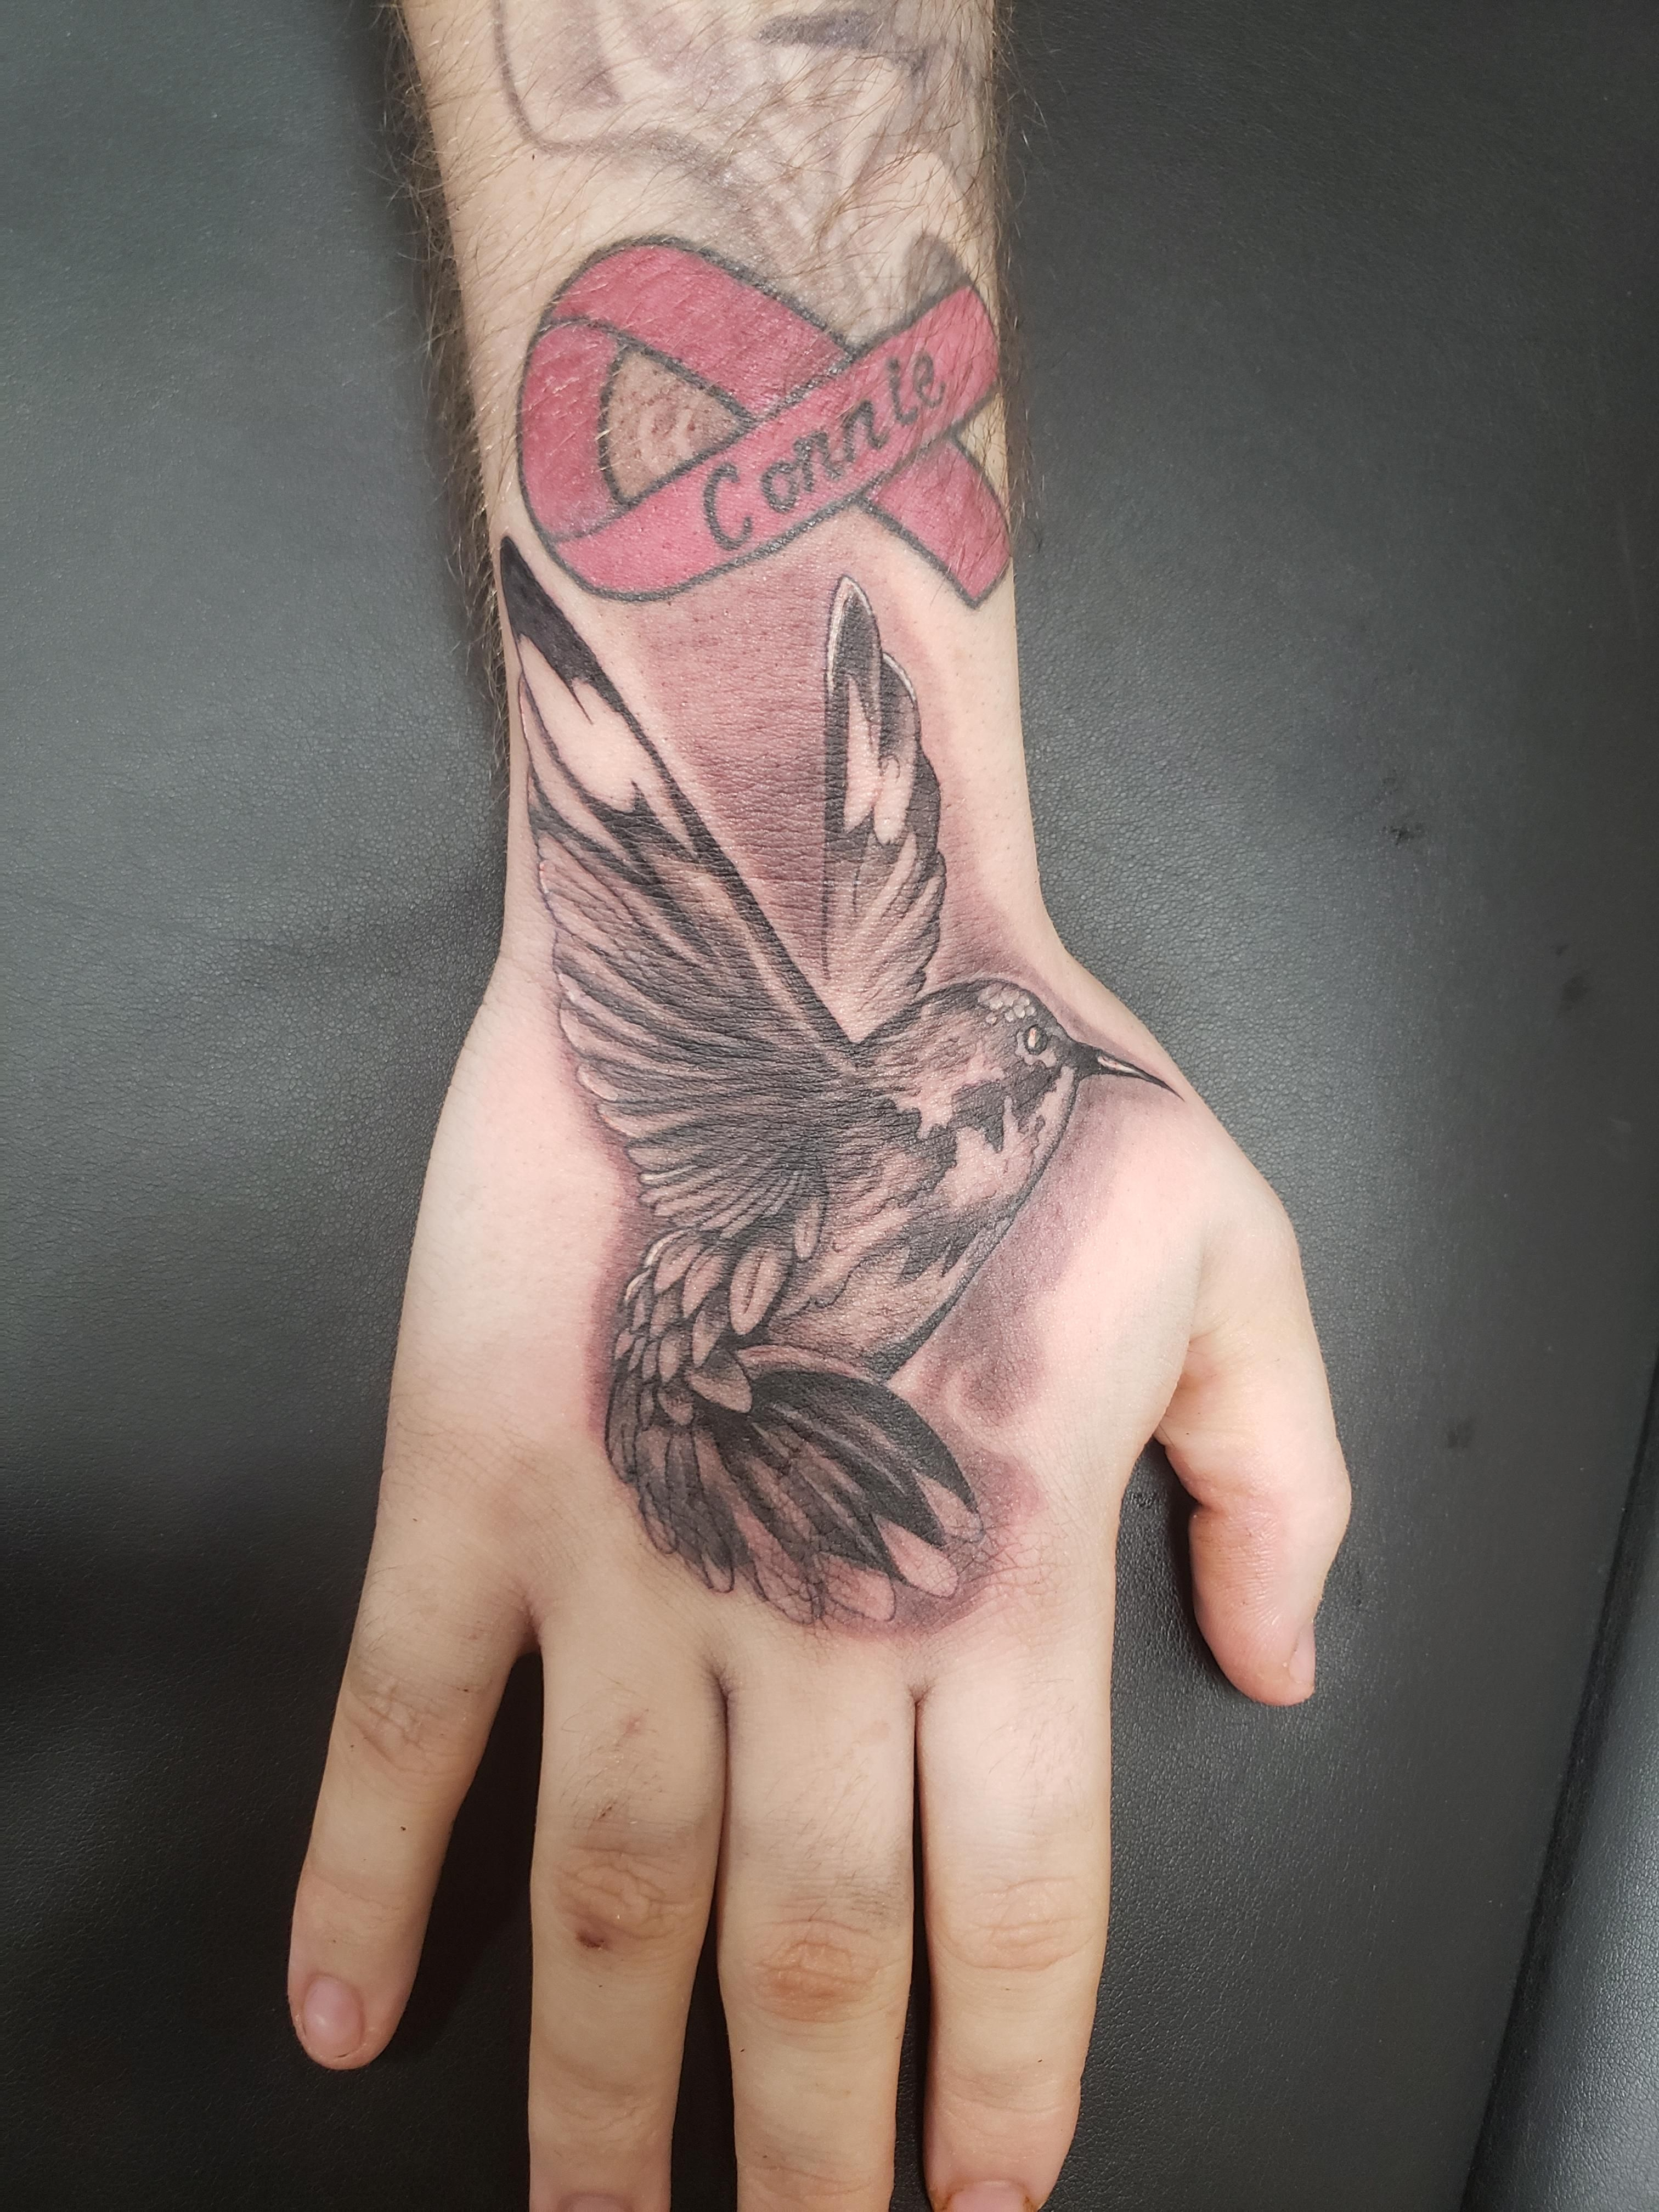 My New Humming Bird Hand Tattoo Tattoos Hand Tattoos Bird Hand within dimensions 3024 X 4032